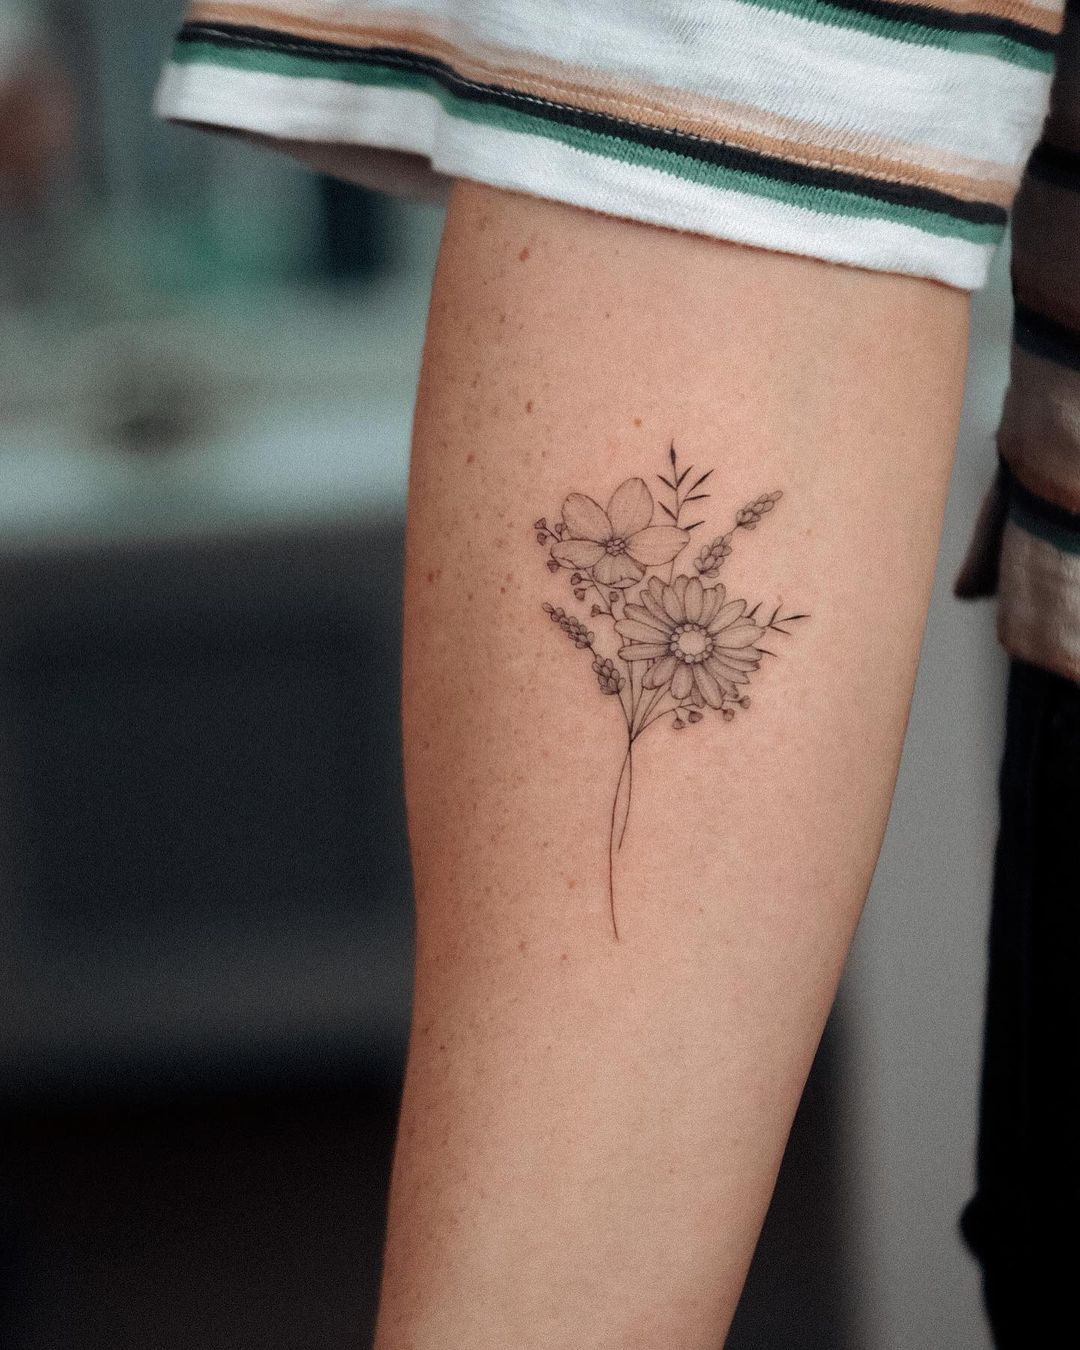 Cute lily tattoo by bunami.ink